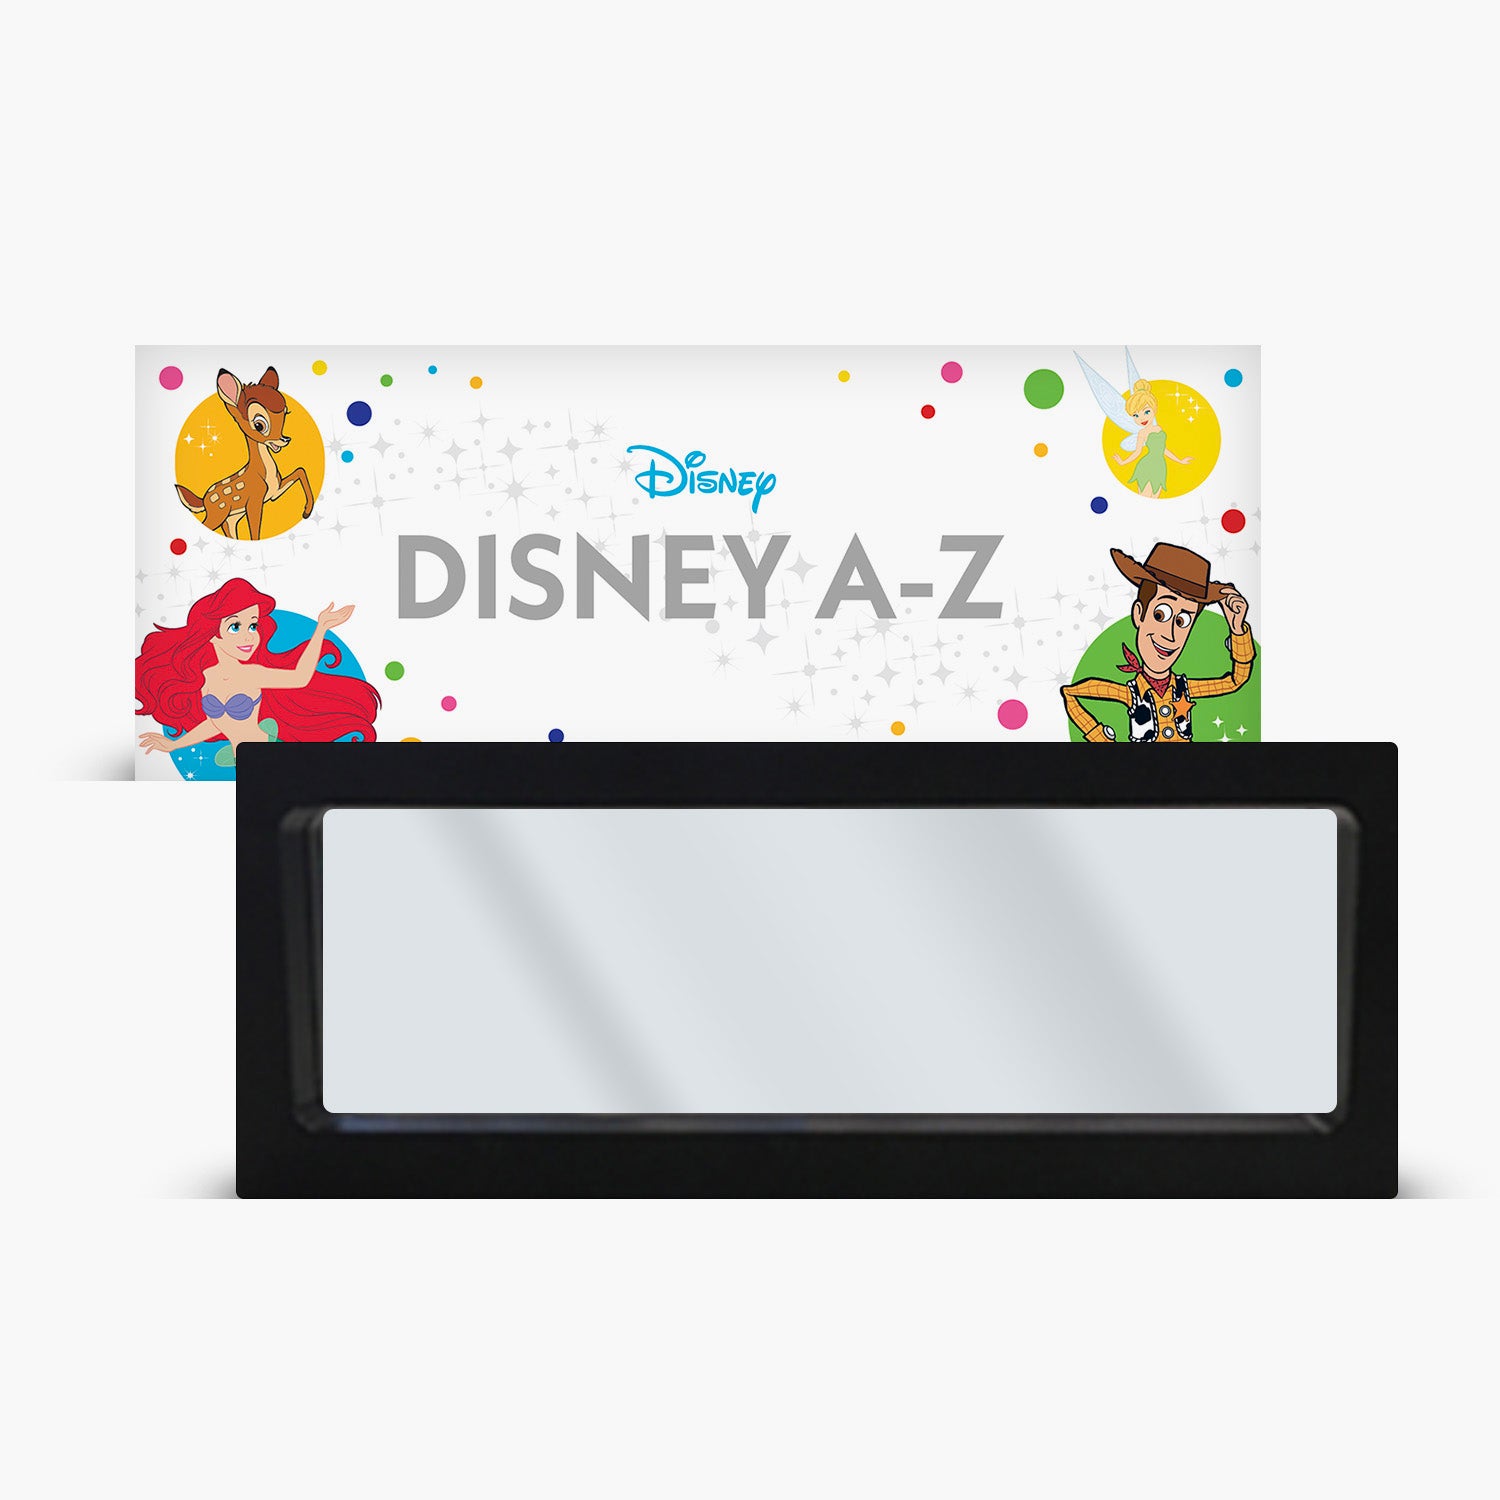 Disney A-Z Regular Frame